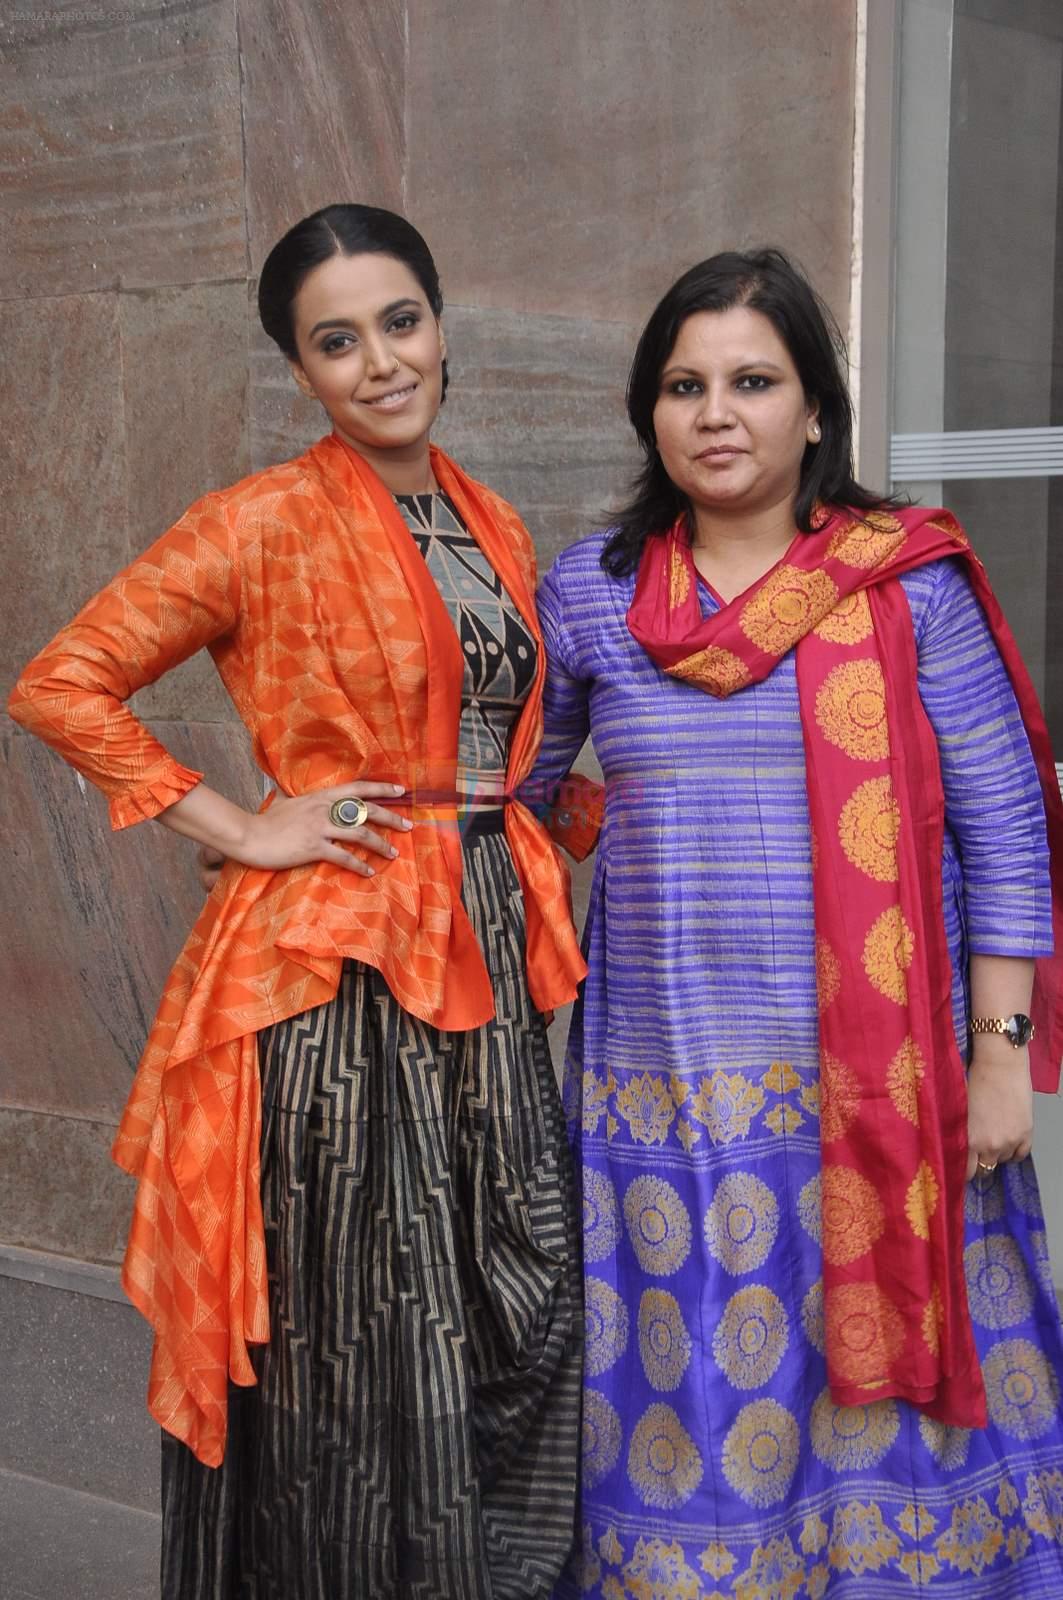 Swara Bhaskar at Lakme fashion week preview in Mumbai on 3rd Aug 2015